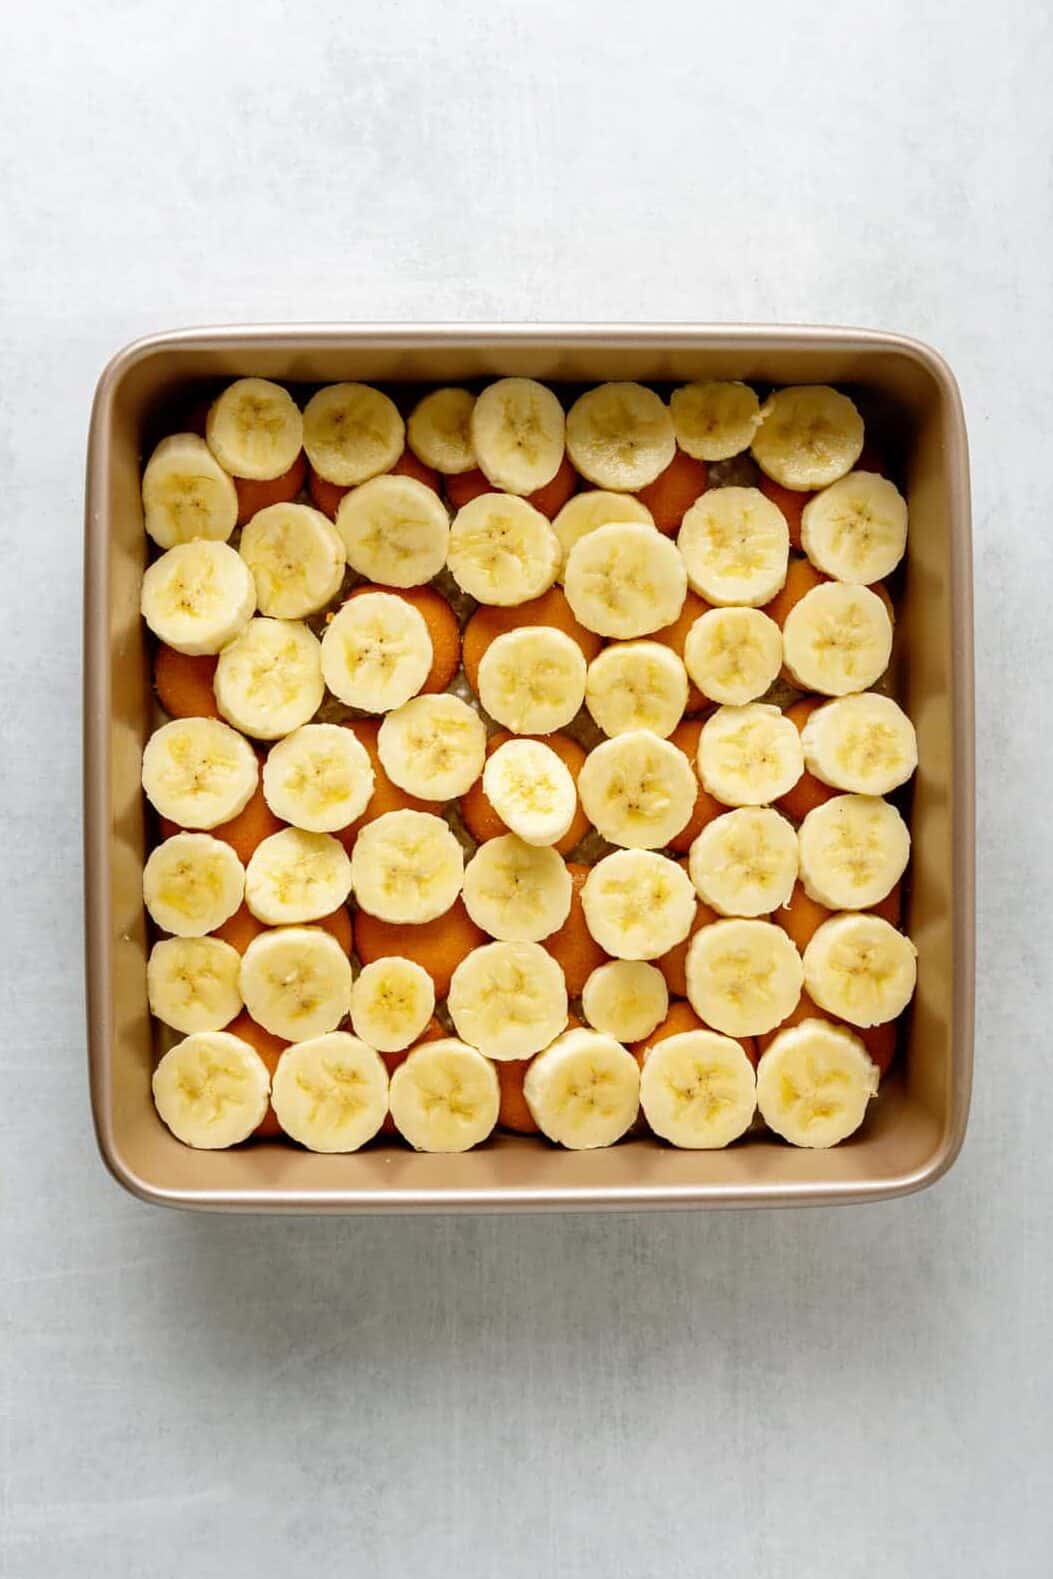 sliced bananas and nilla wafers layered in an 8x8 pan